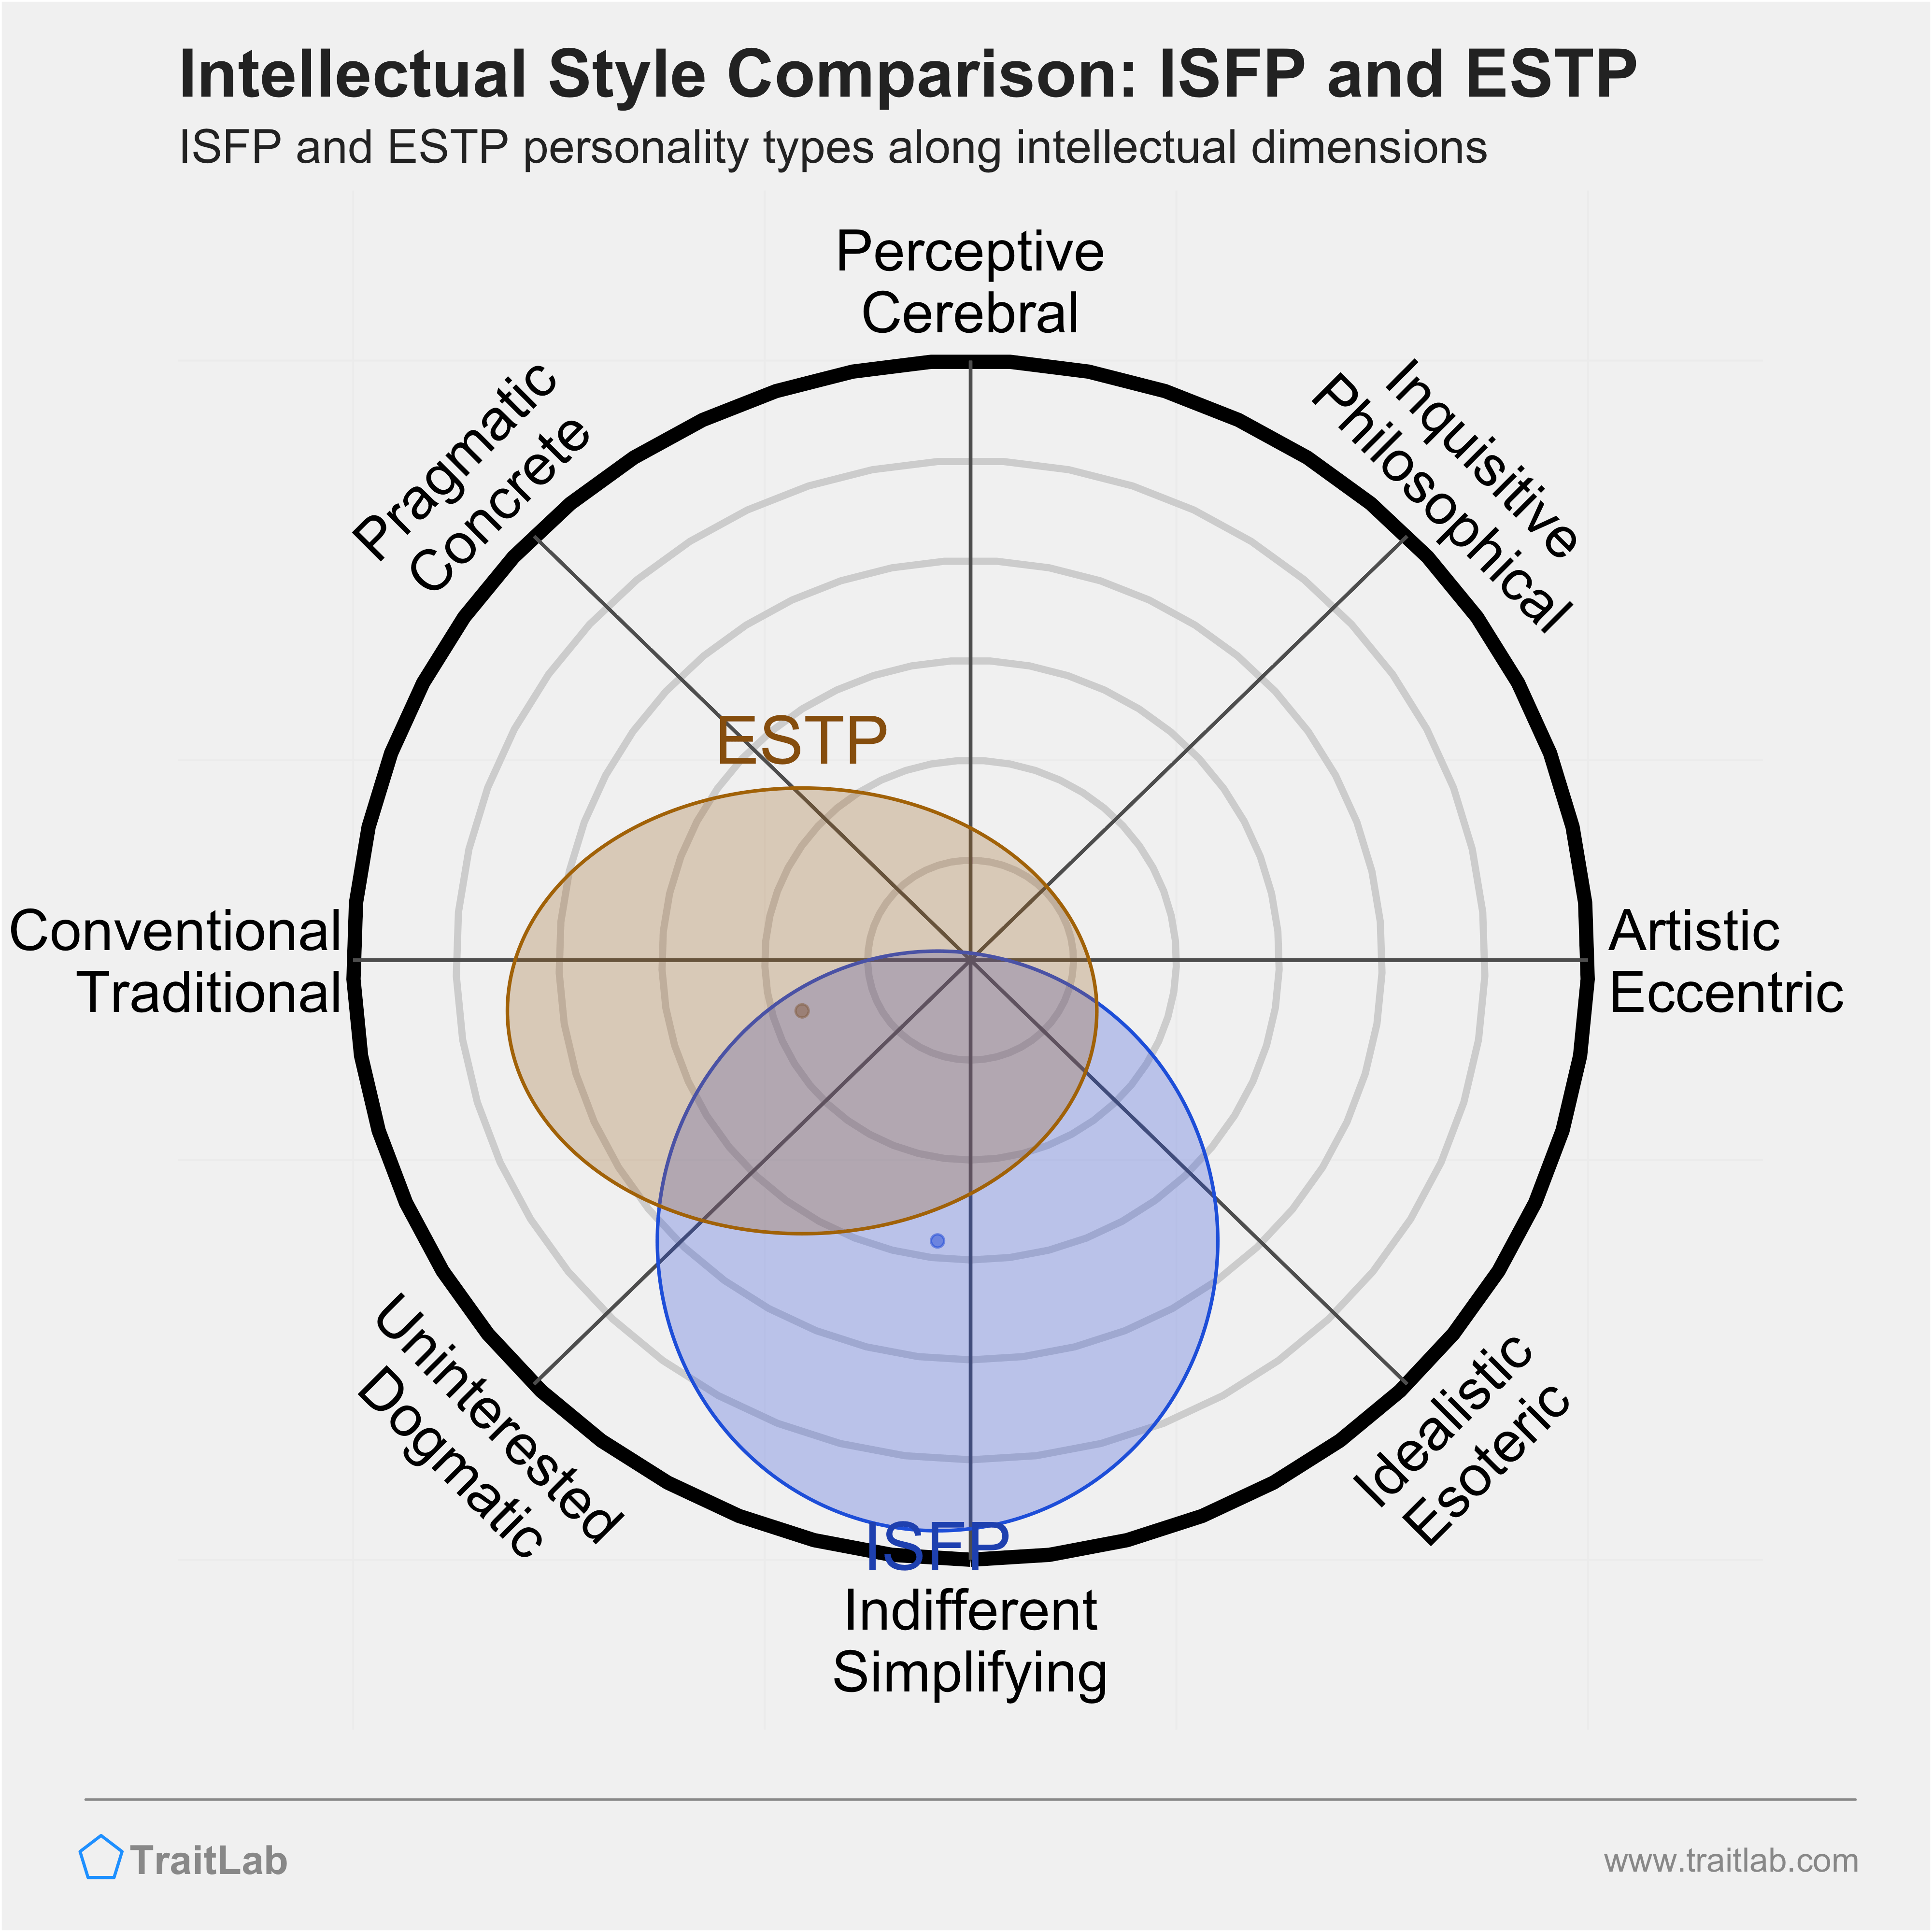 ISFP and ESTP comparison across intellectual dimensions